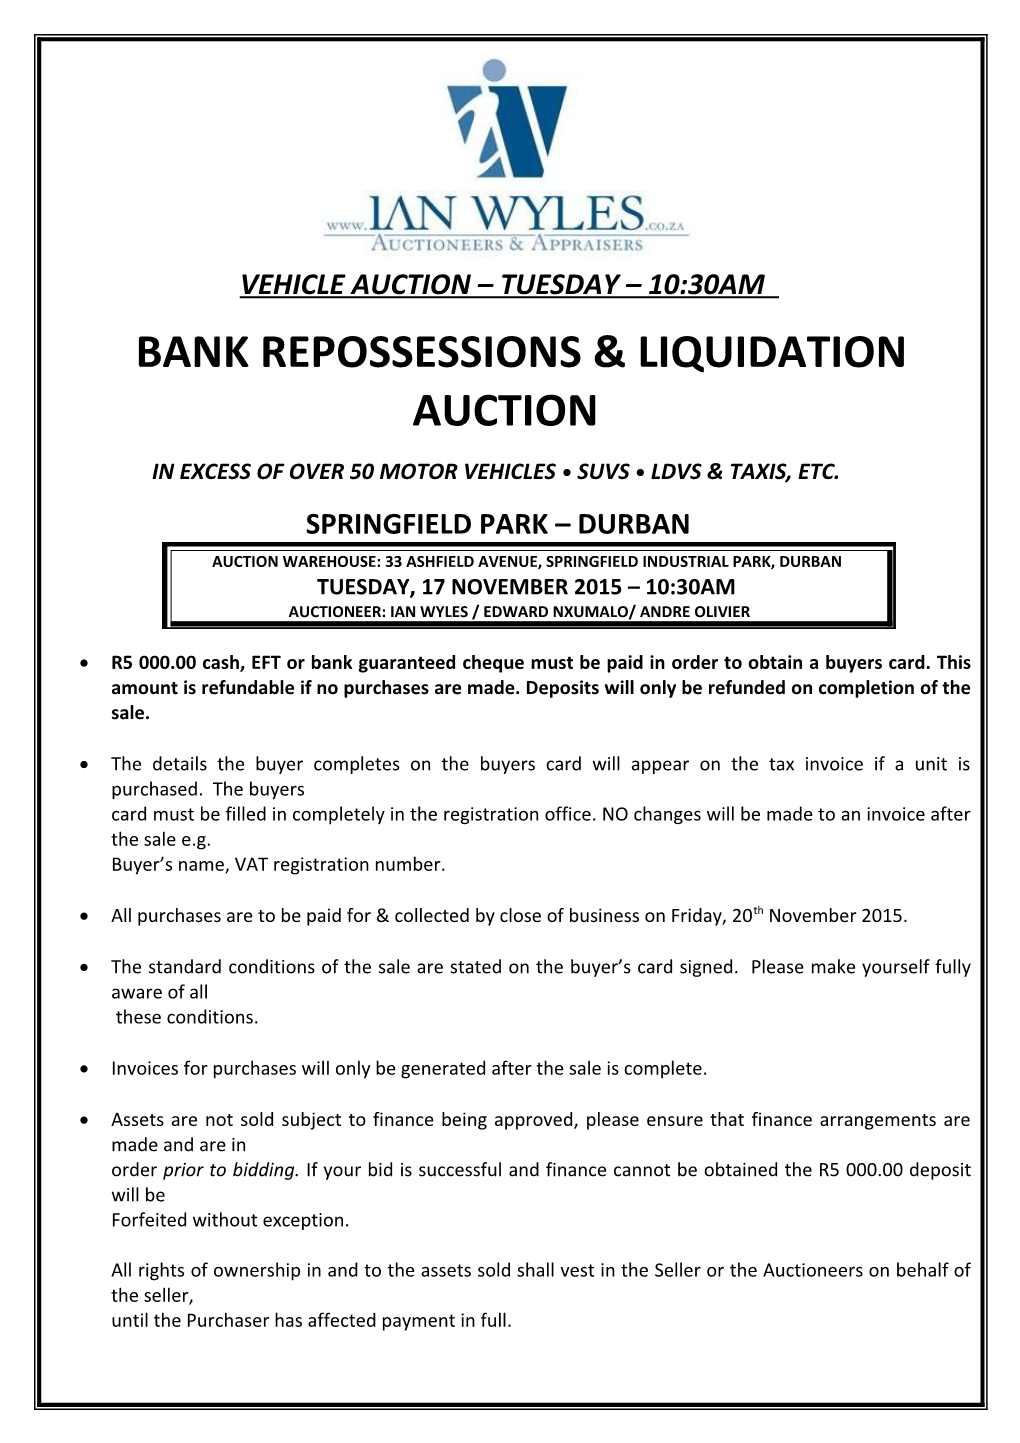 Bank Repossessions & Liquidation Auction